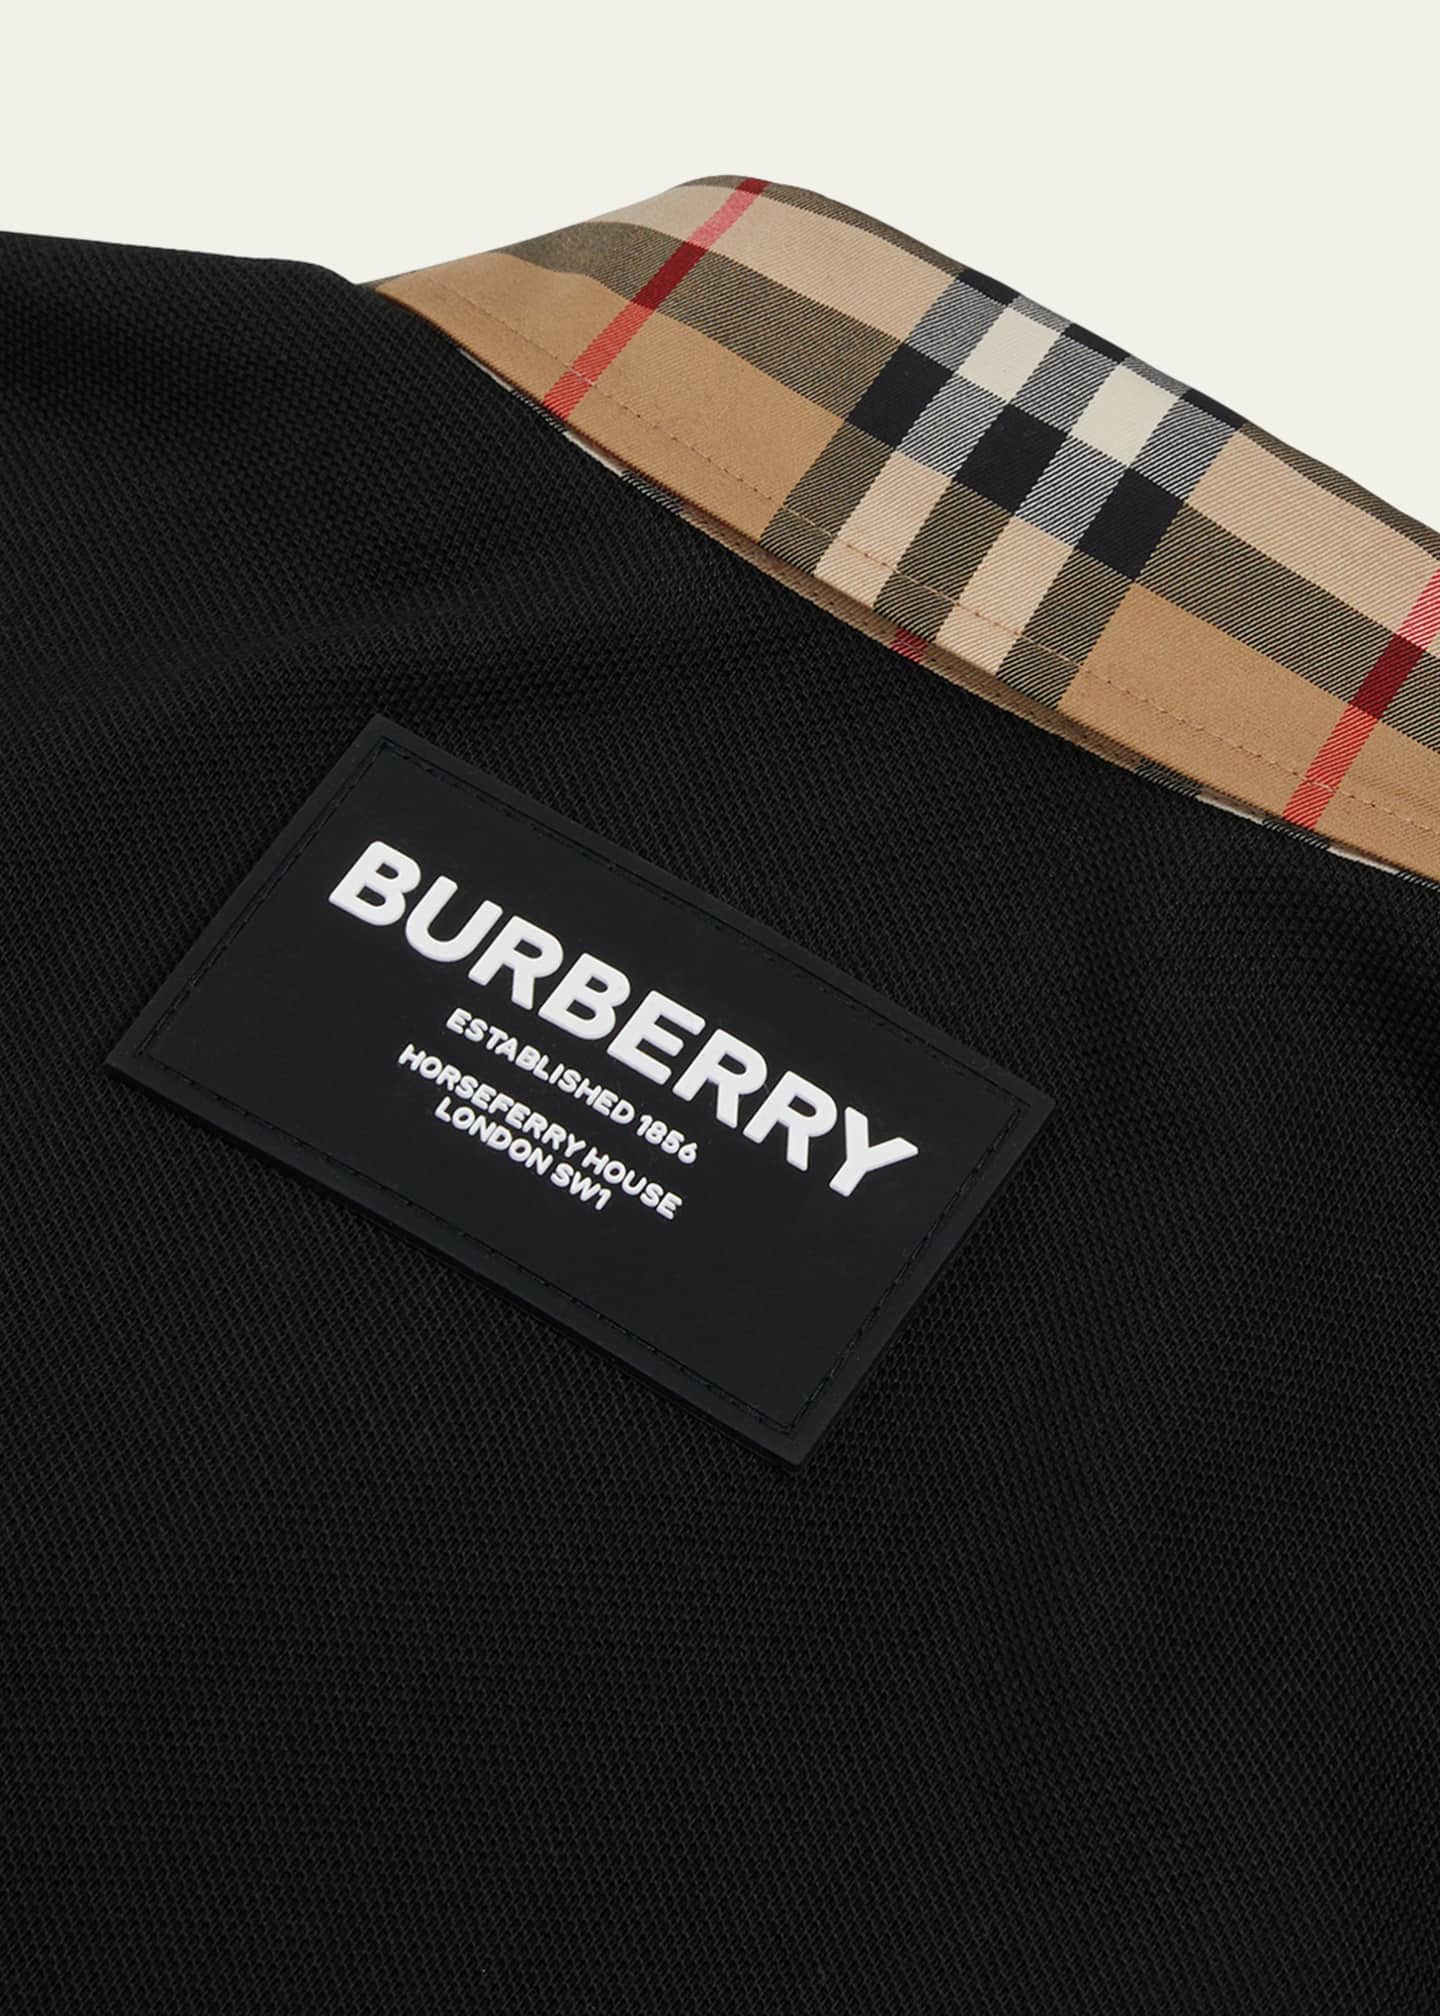 Burberry Boy's Johane Check Short Sleeve Polo Shirt, Size 3-14 ...